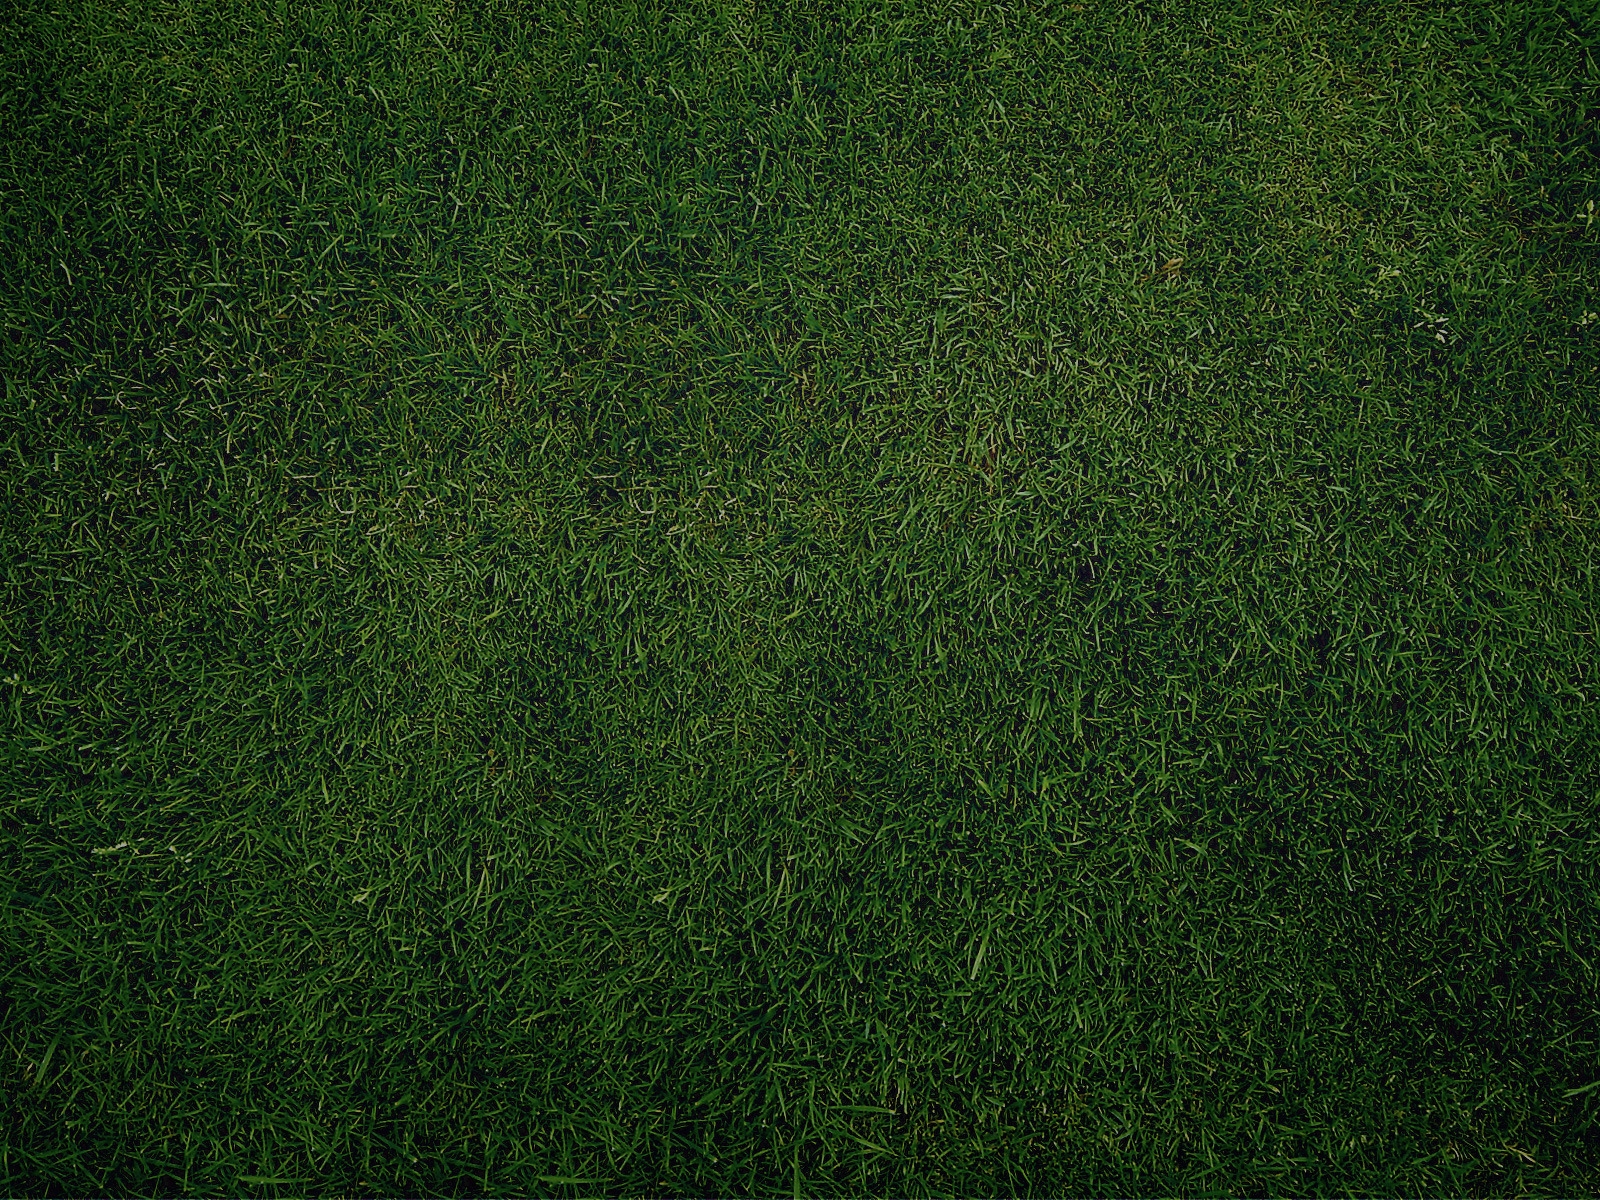 Green Grass for 1600 x 1200 resolution